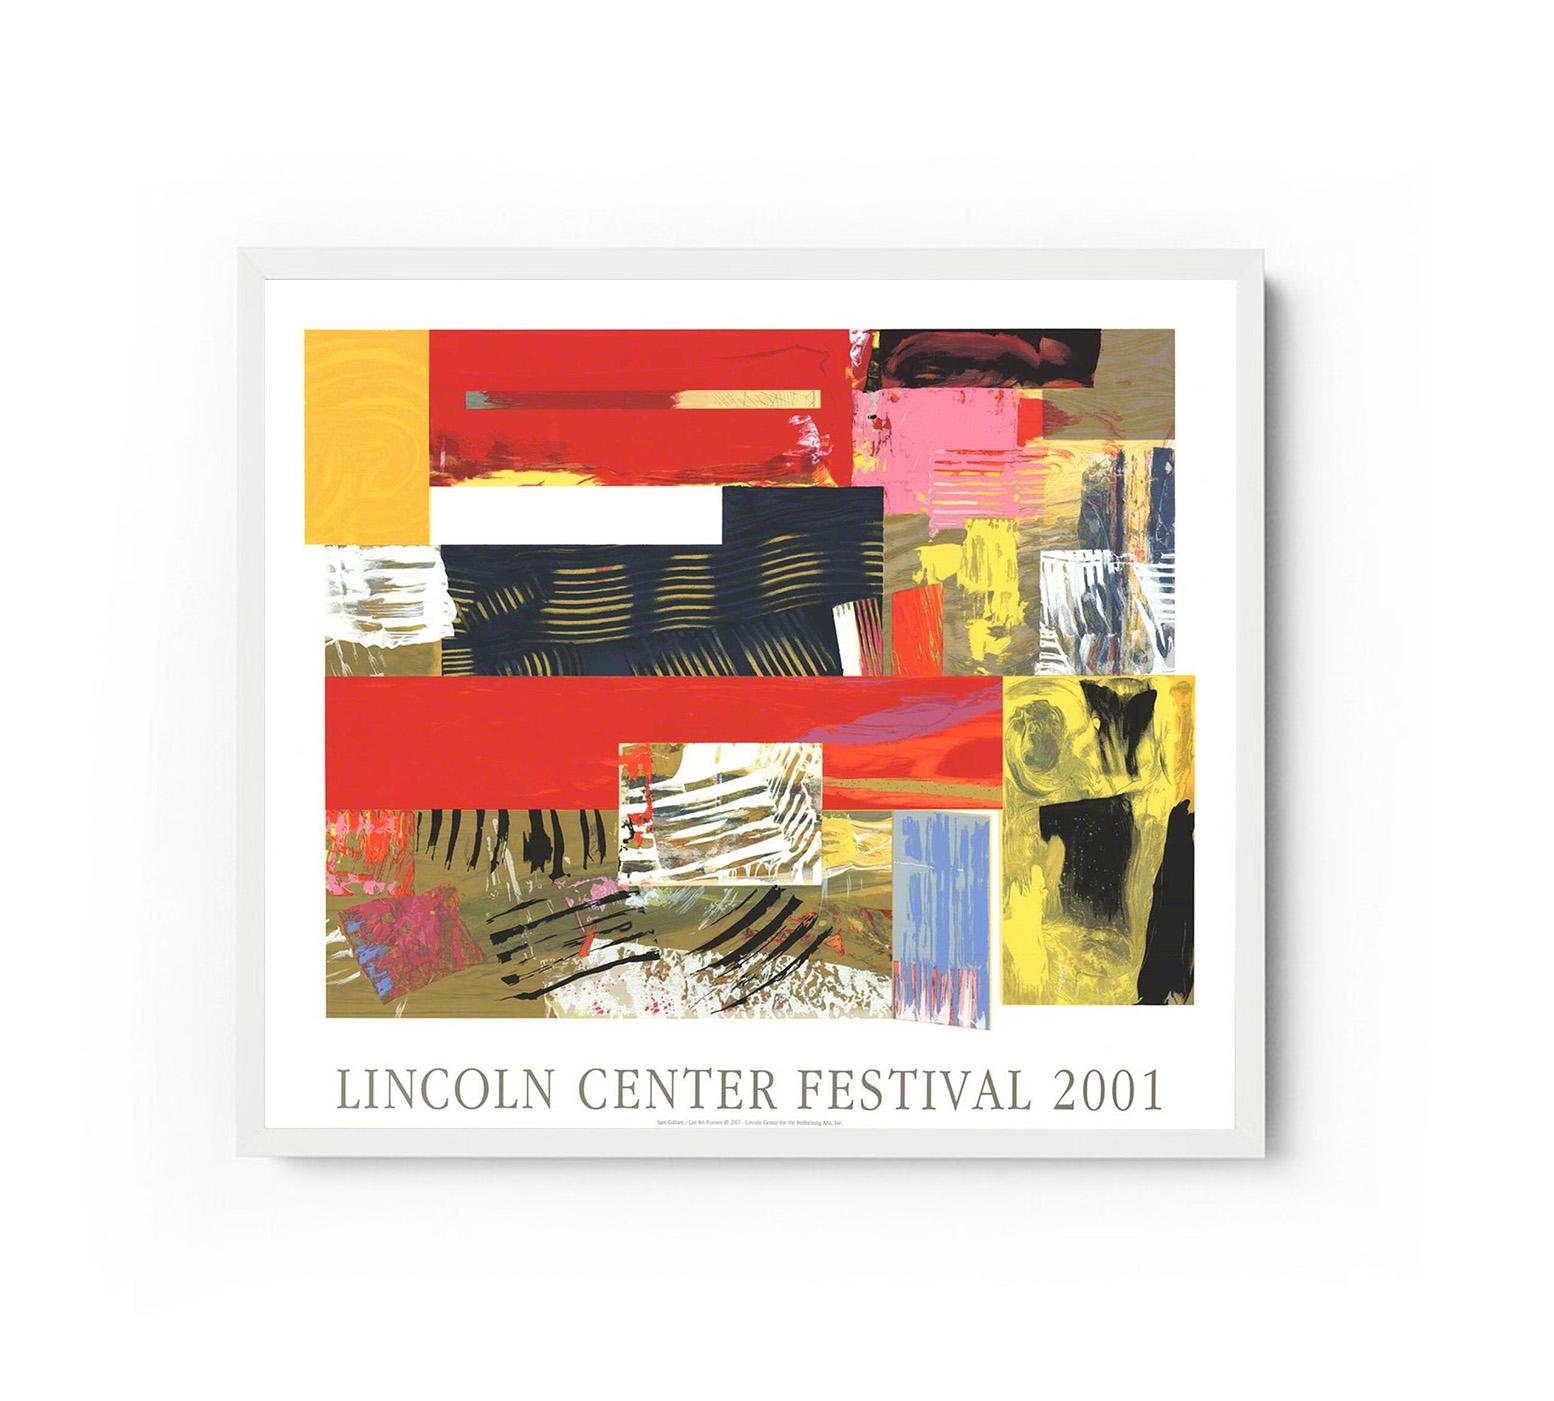 Lincoln Center Festival 2001 Poster - Print by Sam Gilliam